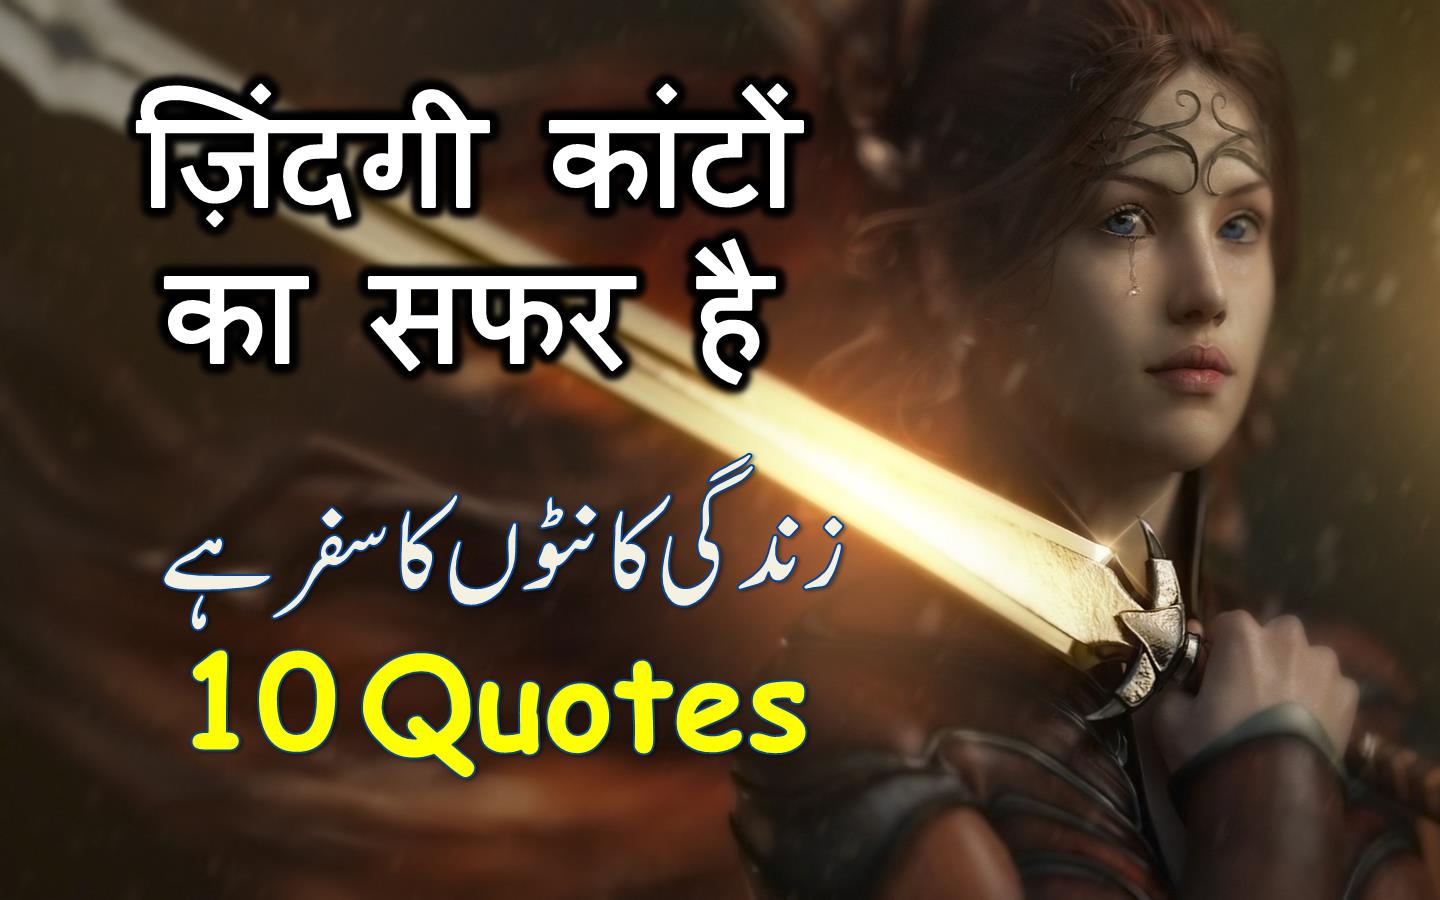 Zindagi kantoon ka safar hai Quotes in Hindi Urdu 12